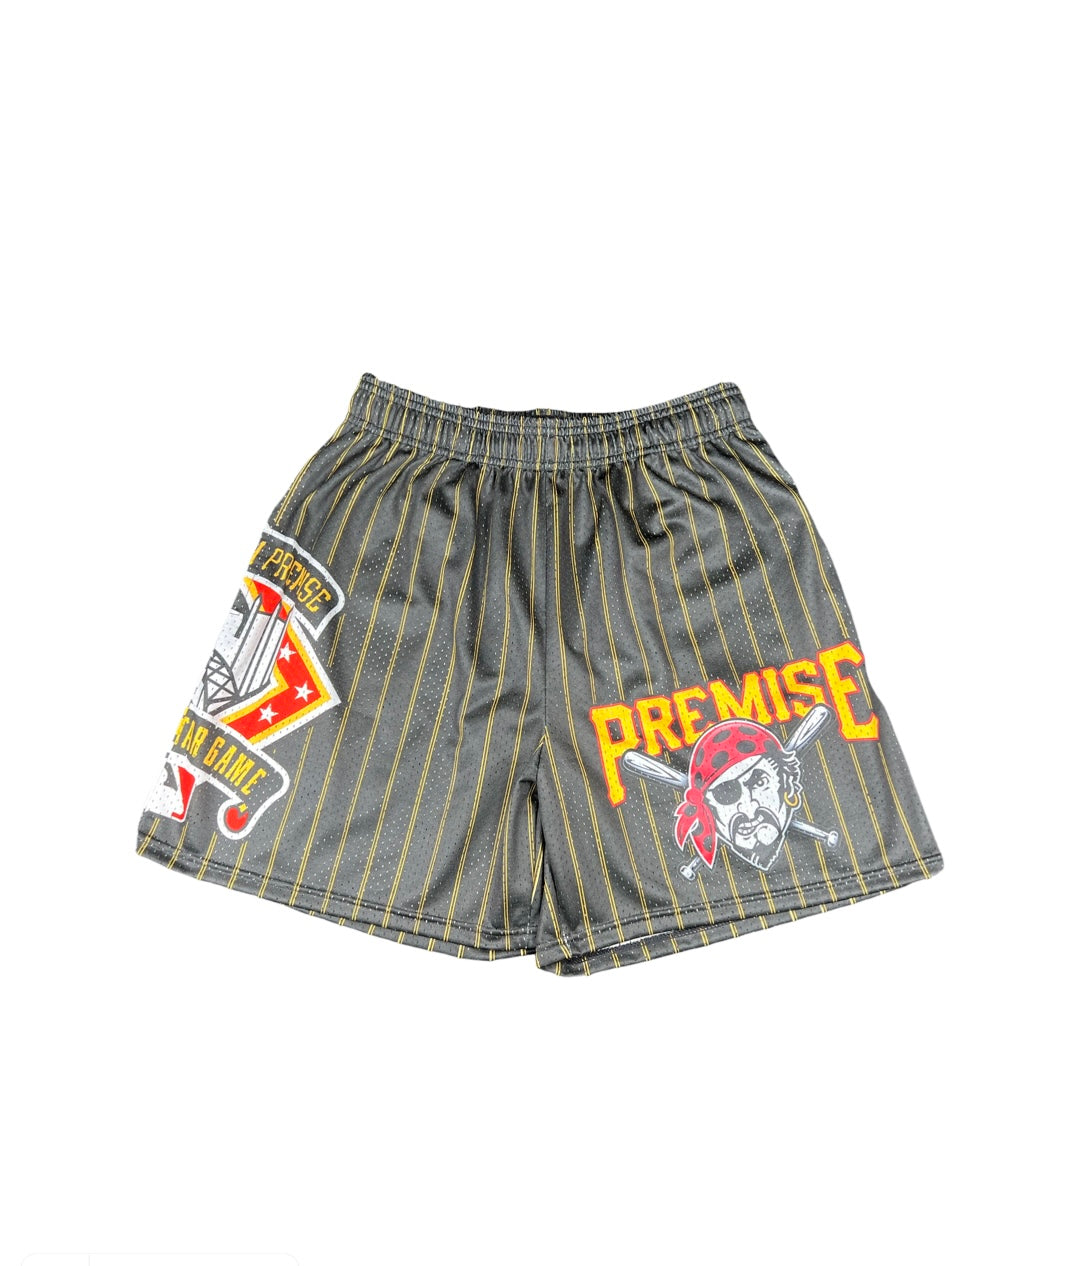 Stl Cardinals (Premise) Mesh Shorts